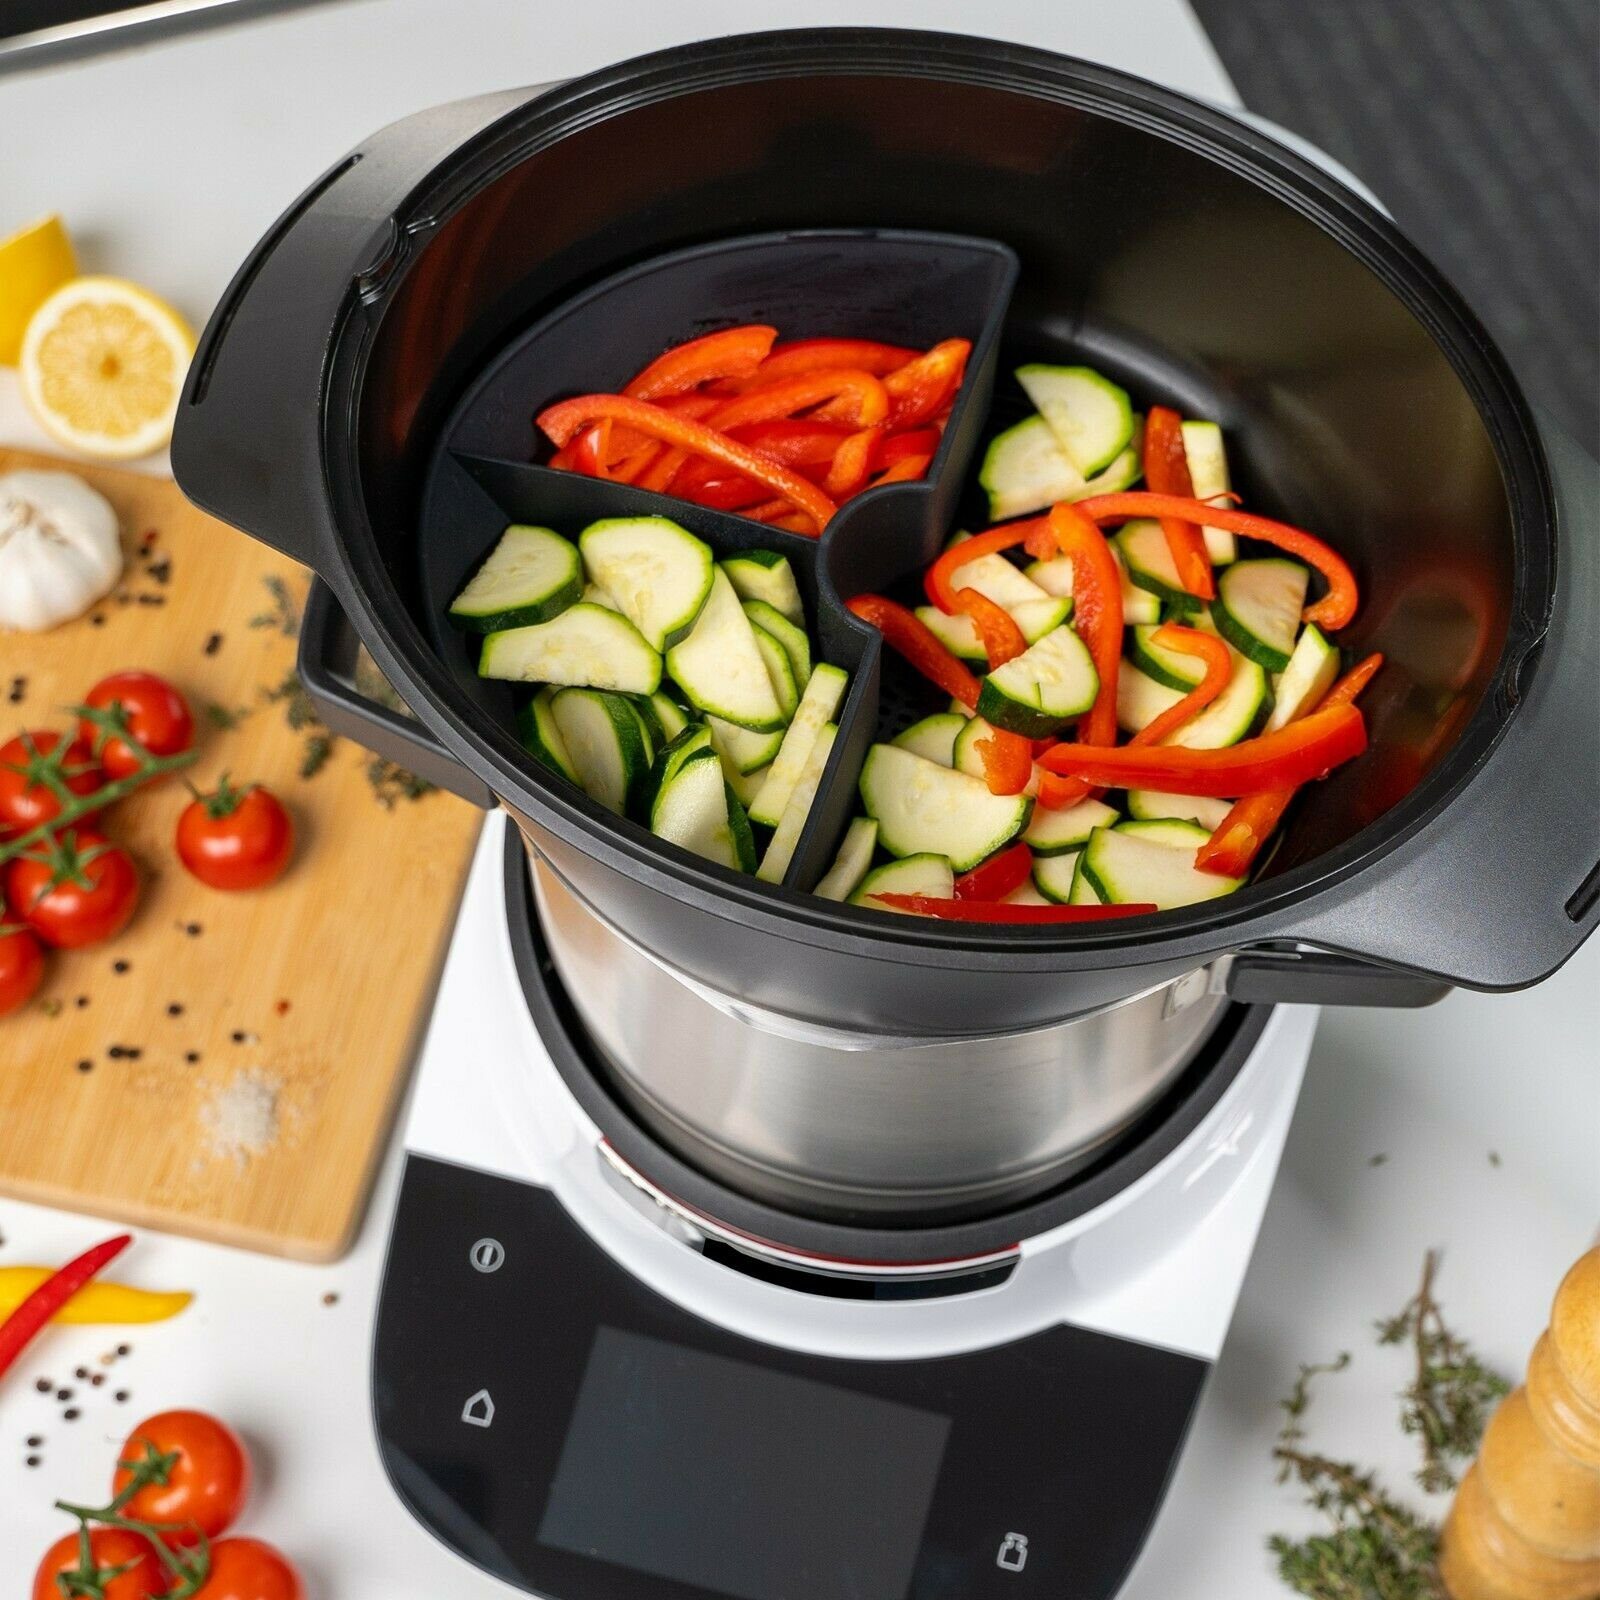 Cookit Küchenmaschinen-Adapter Dampfgarraum mixcover Bosch für Garraumteiler Mixcover (viertel)